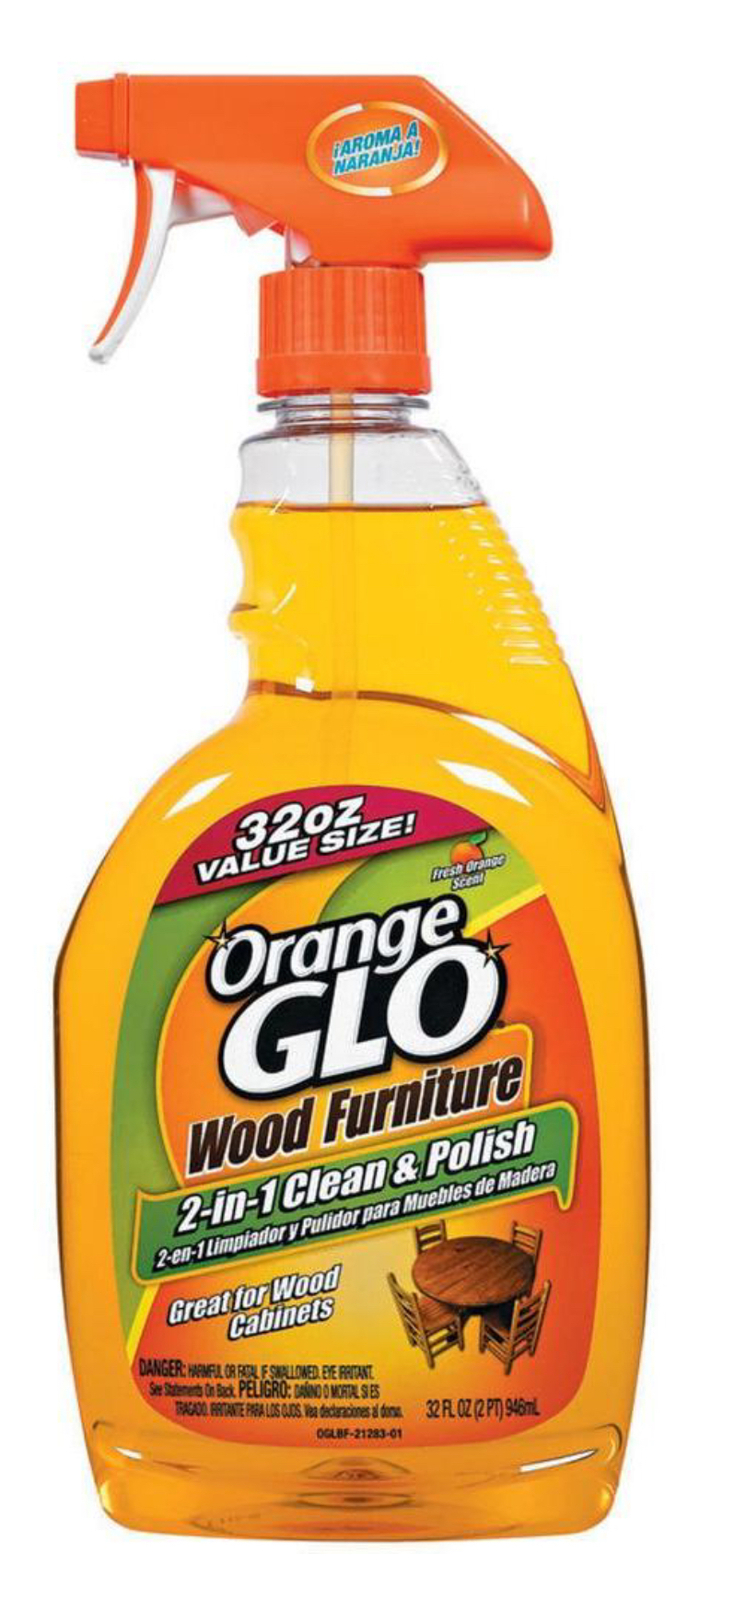 Orange GLO Wood Furniture Cleaner and Polish Spray, 32 Fl. Oz. - $14.79